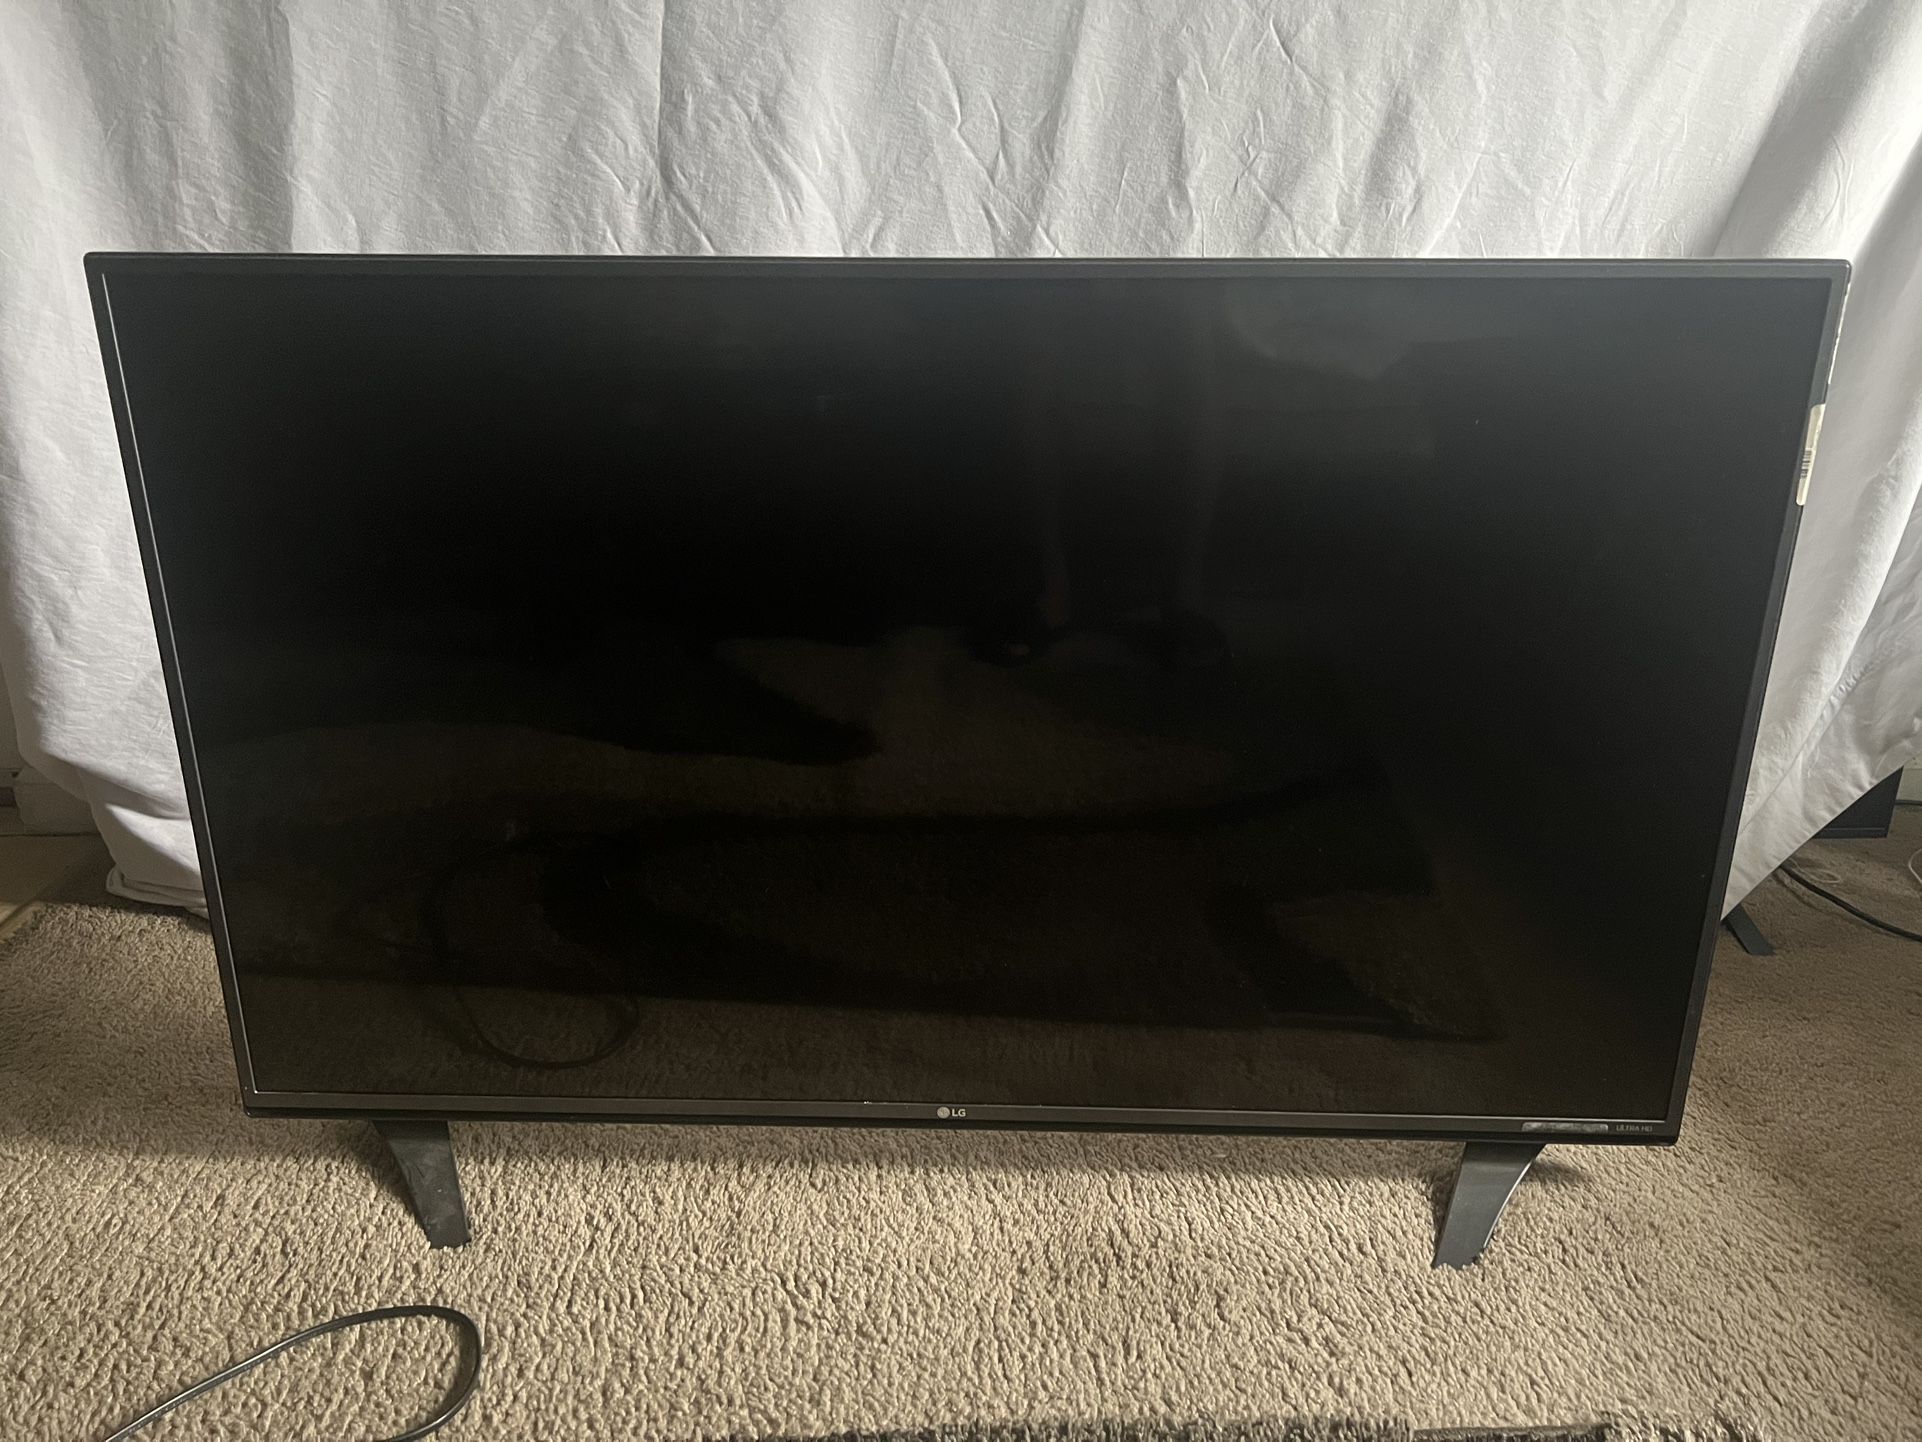 LG smart tv 40 inch